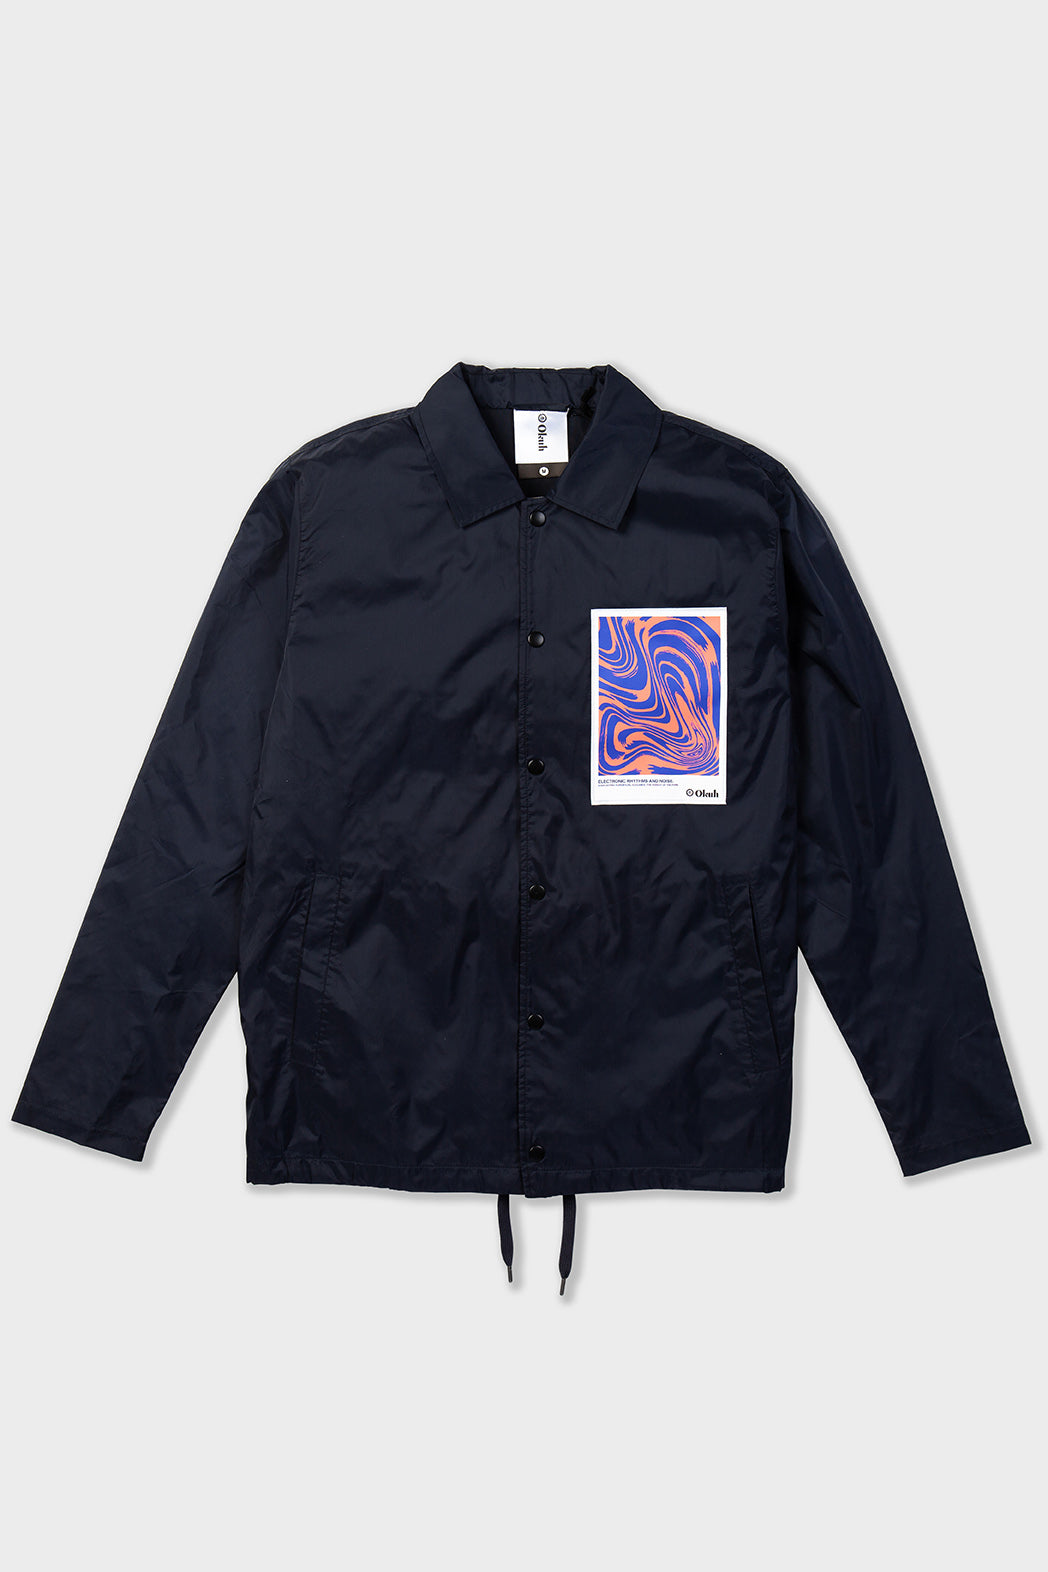 Yokoh - Liner Jacket